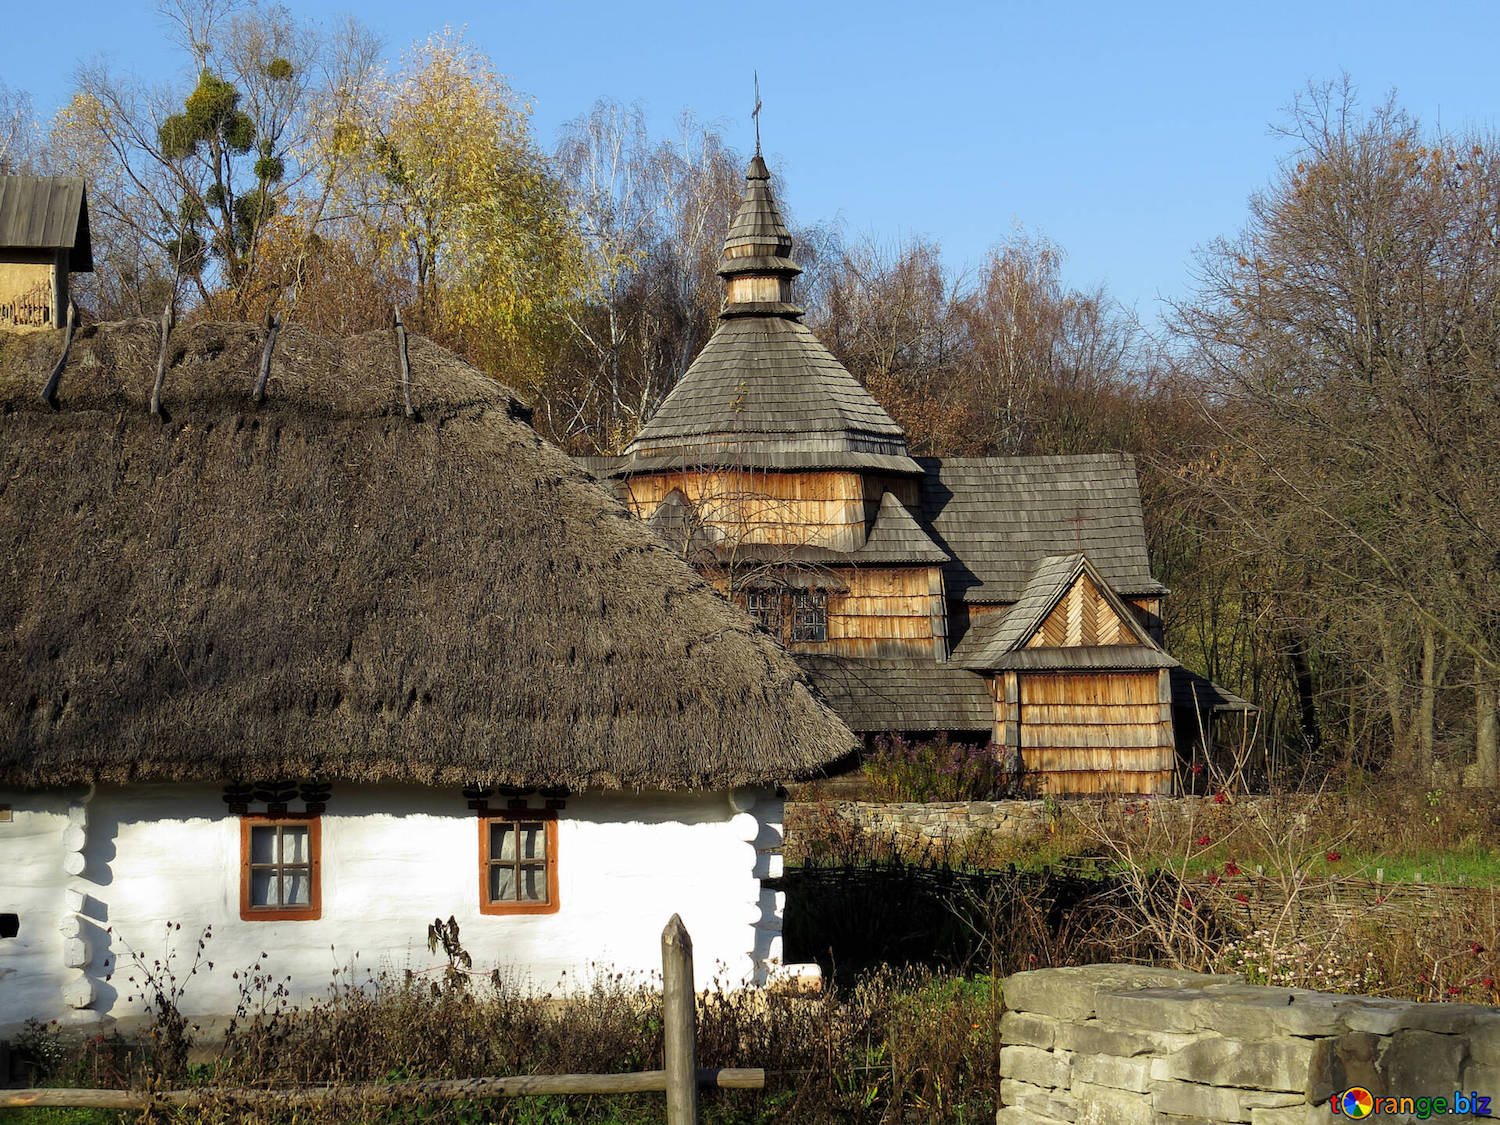 Ukrainian traditional village. Image: ©torange.biz via a CC license